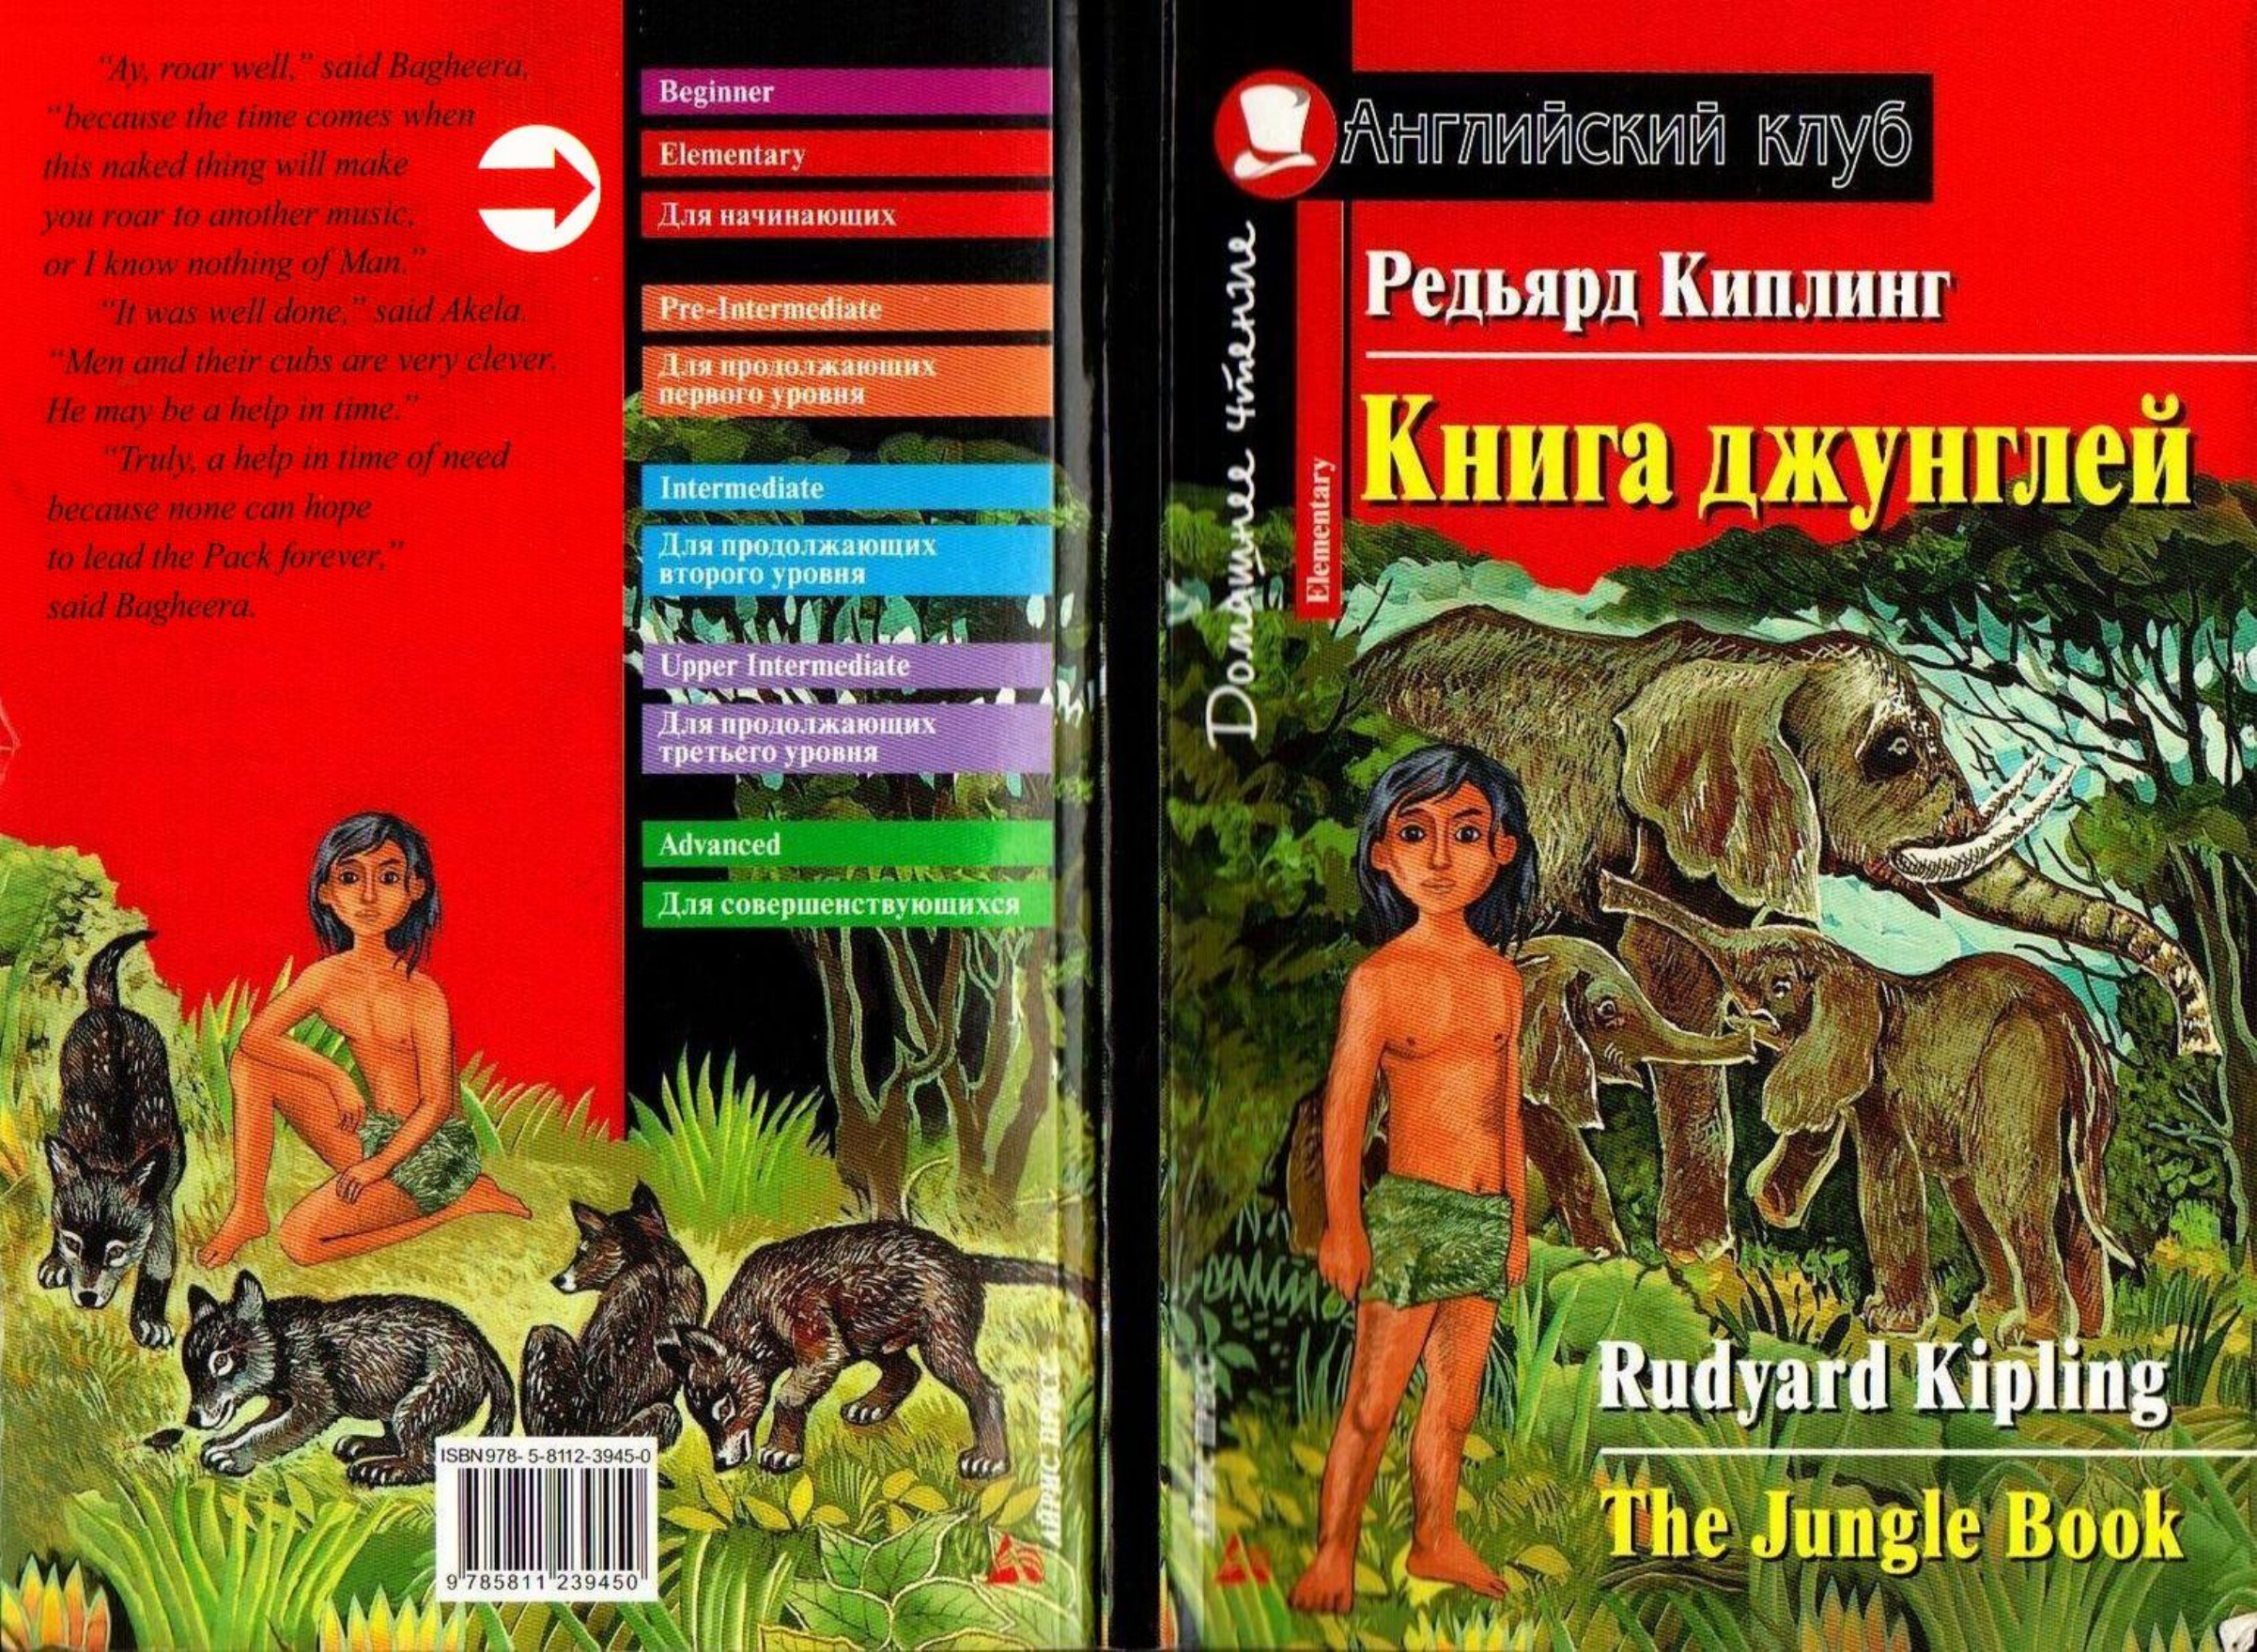 Книги для уровня b1. Киплинг "Маугли". Редьярд Киплинг книга джунглей. Книга джунглей Редьярд Киплинг книга. Английский клуб книга джунглей.